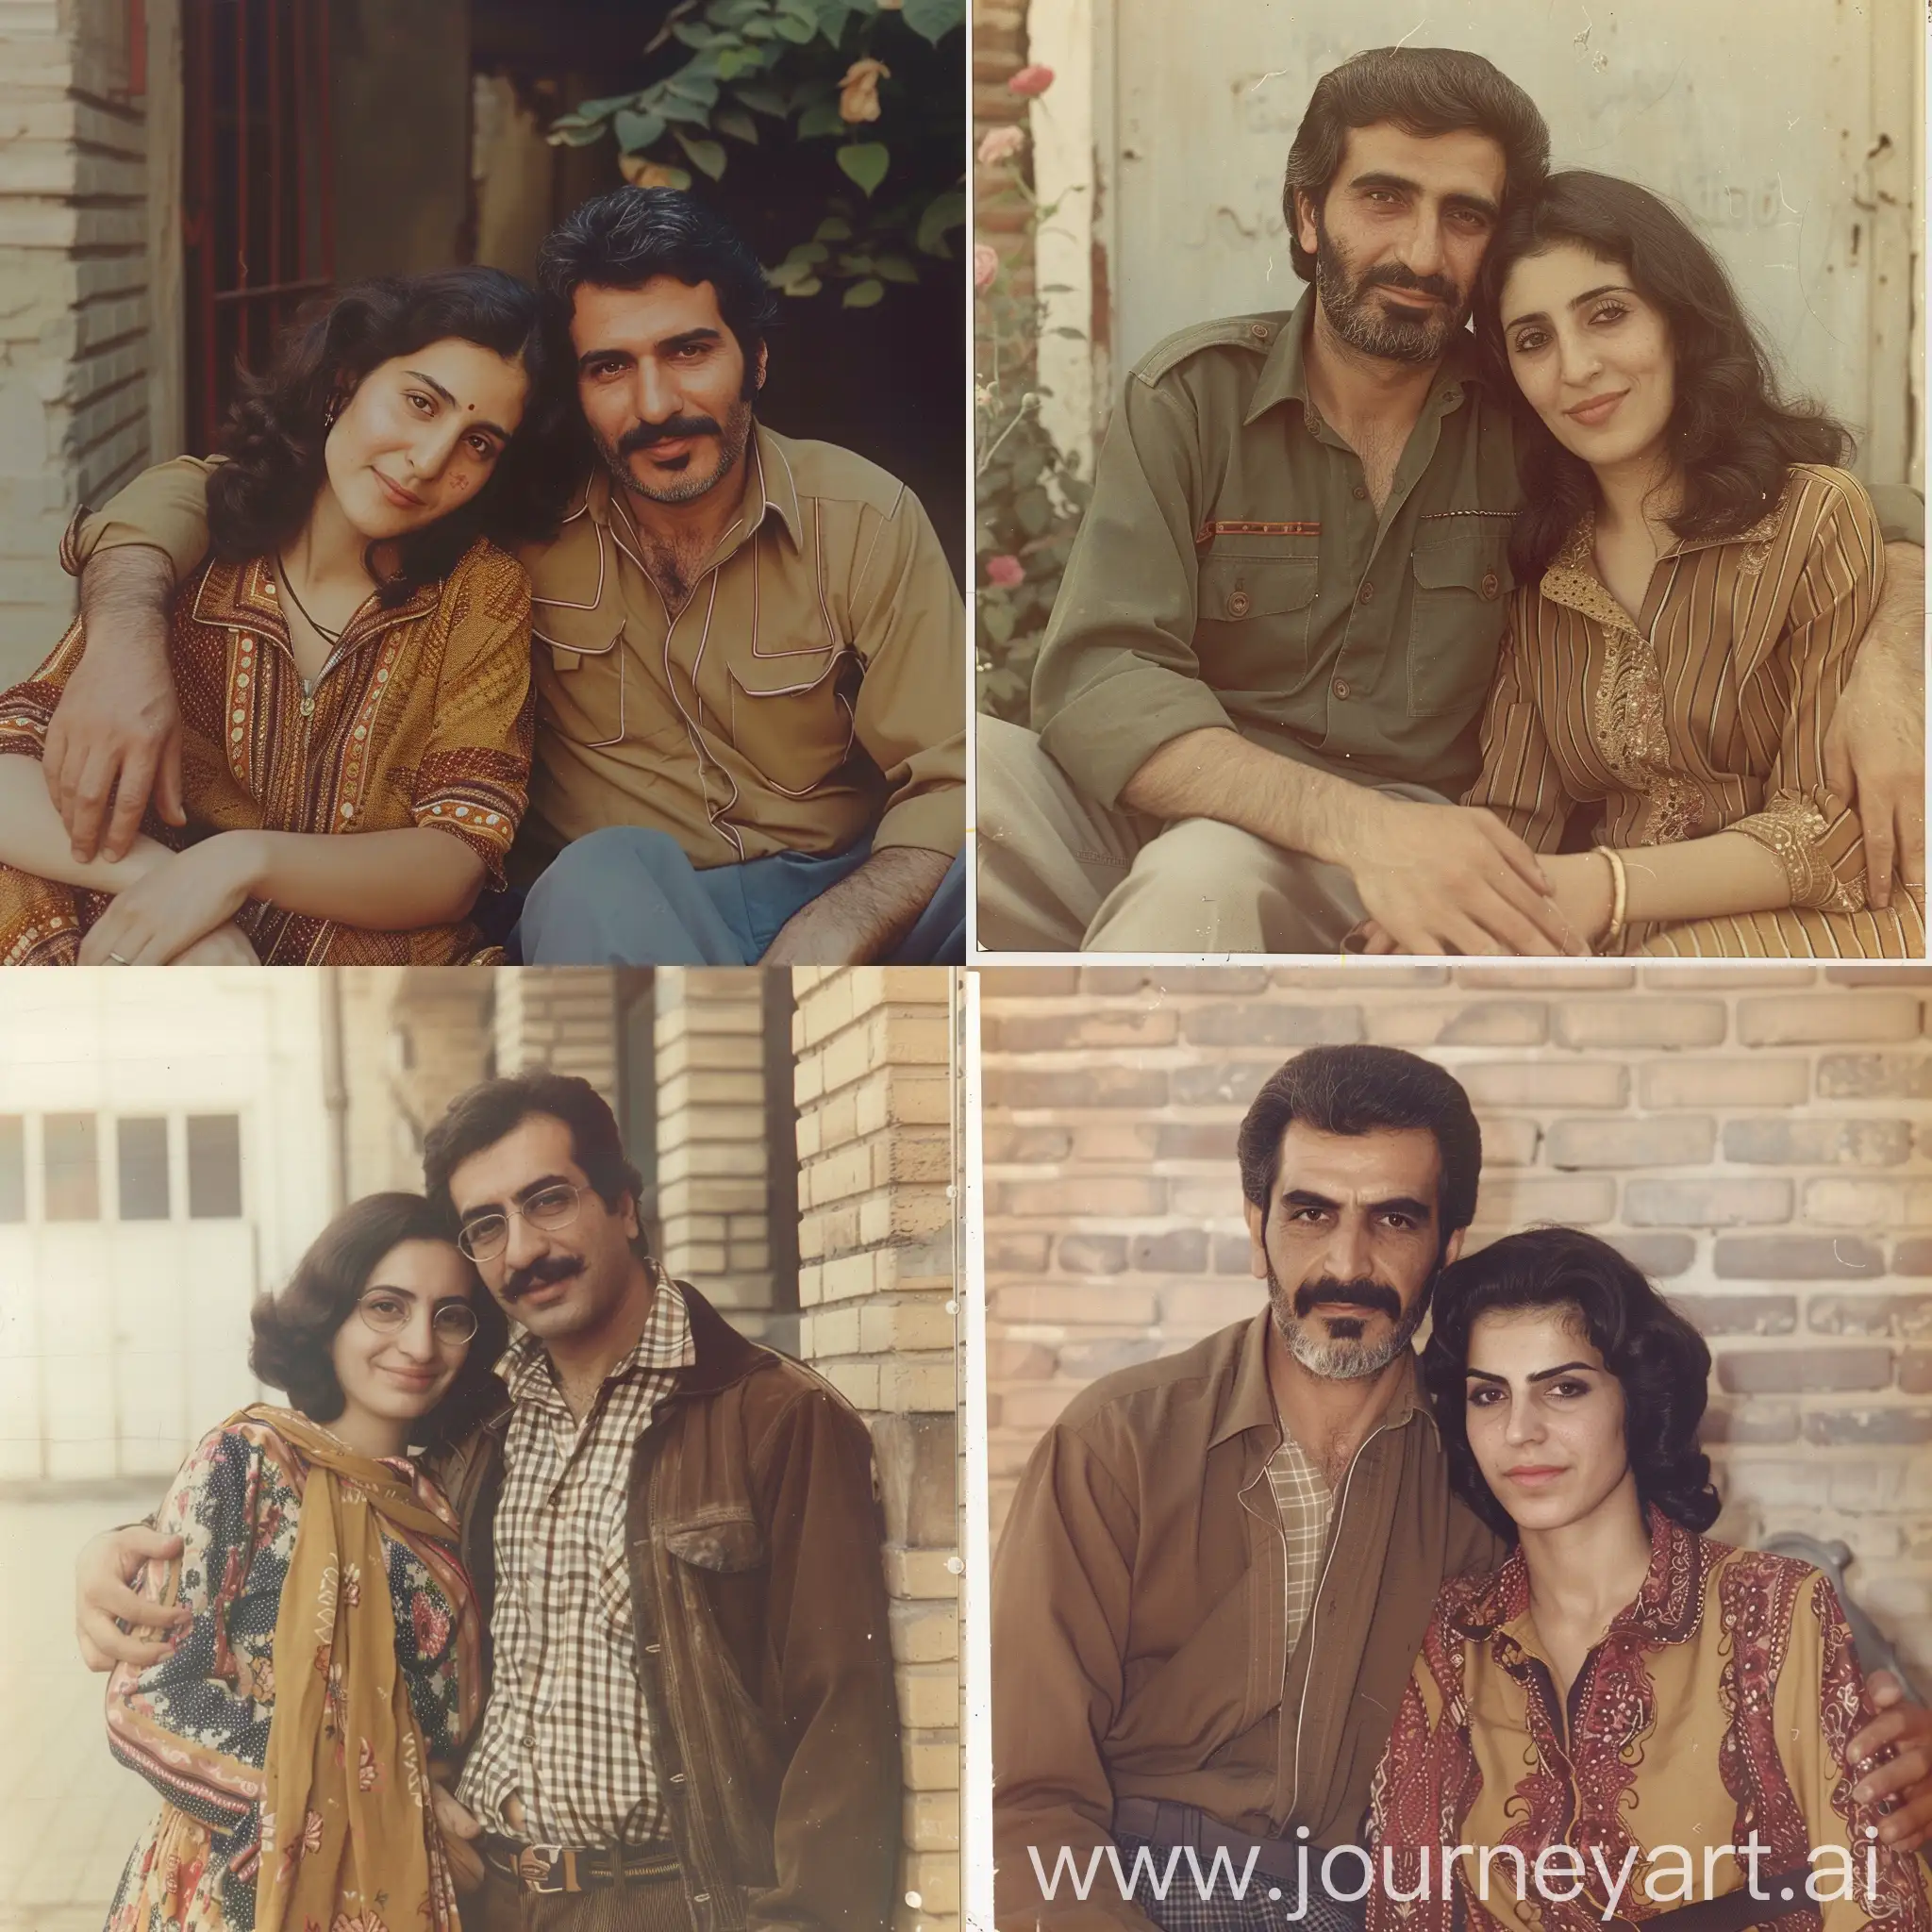 Nostalgic-Iranian-Couple-Portrait-from-the-1970s